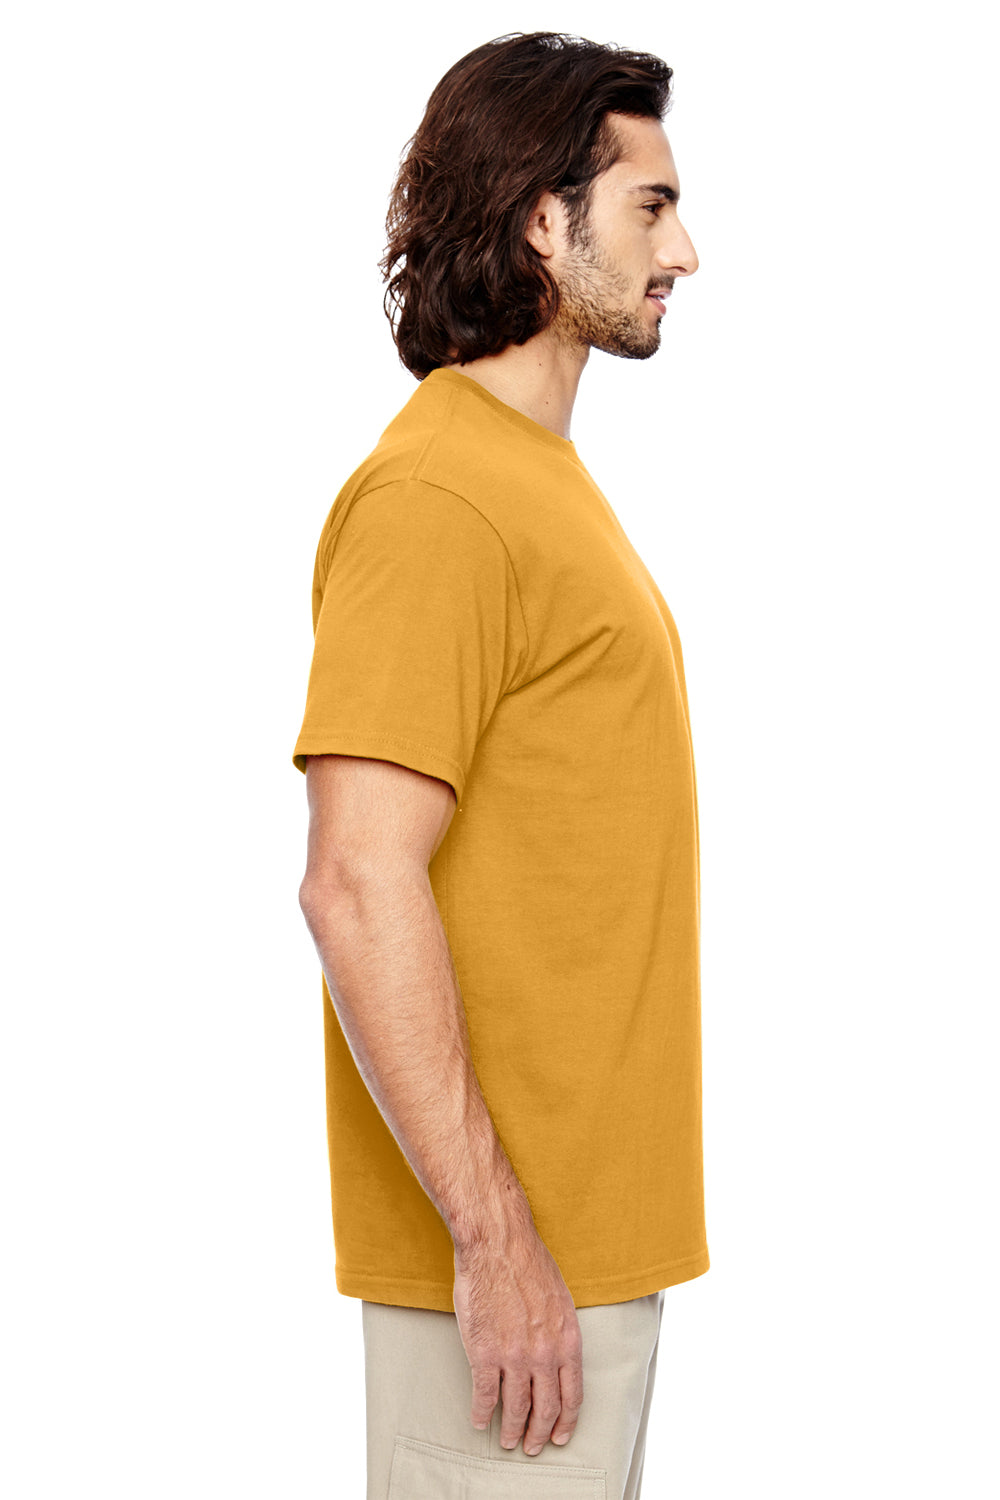 Econscious EC1000 Mens Short Sleeve Crewneck T-Shirt Beehive Yellow Side